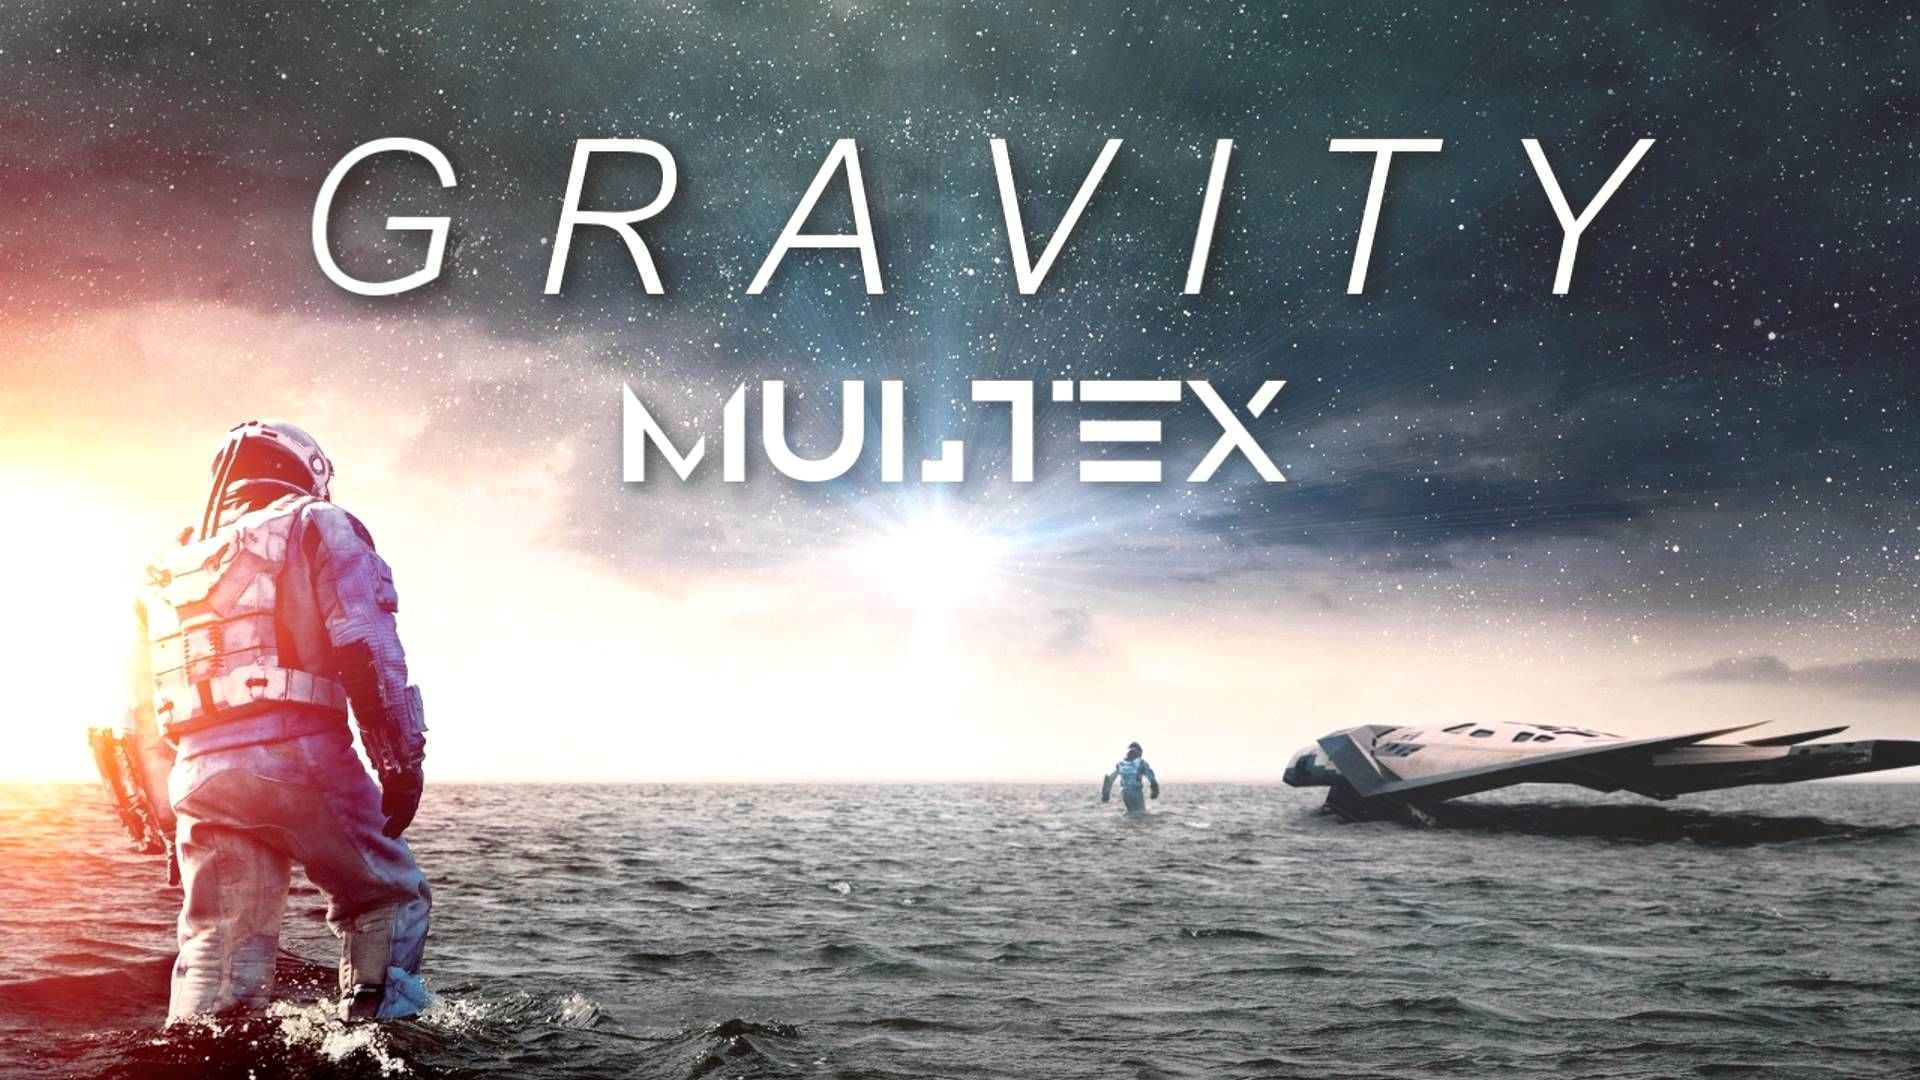 Multex ~gravity